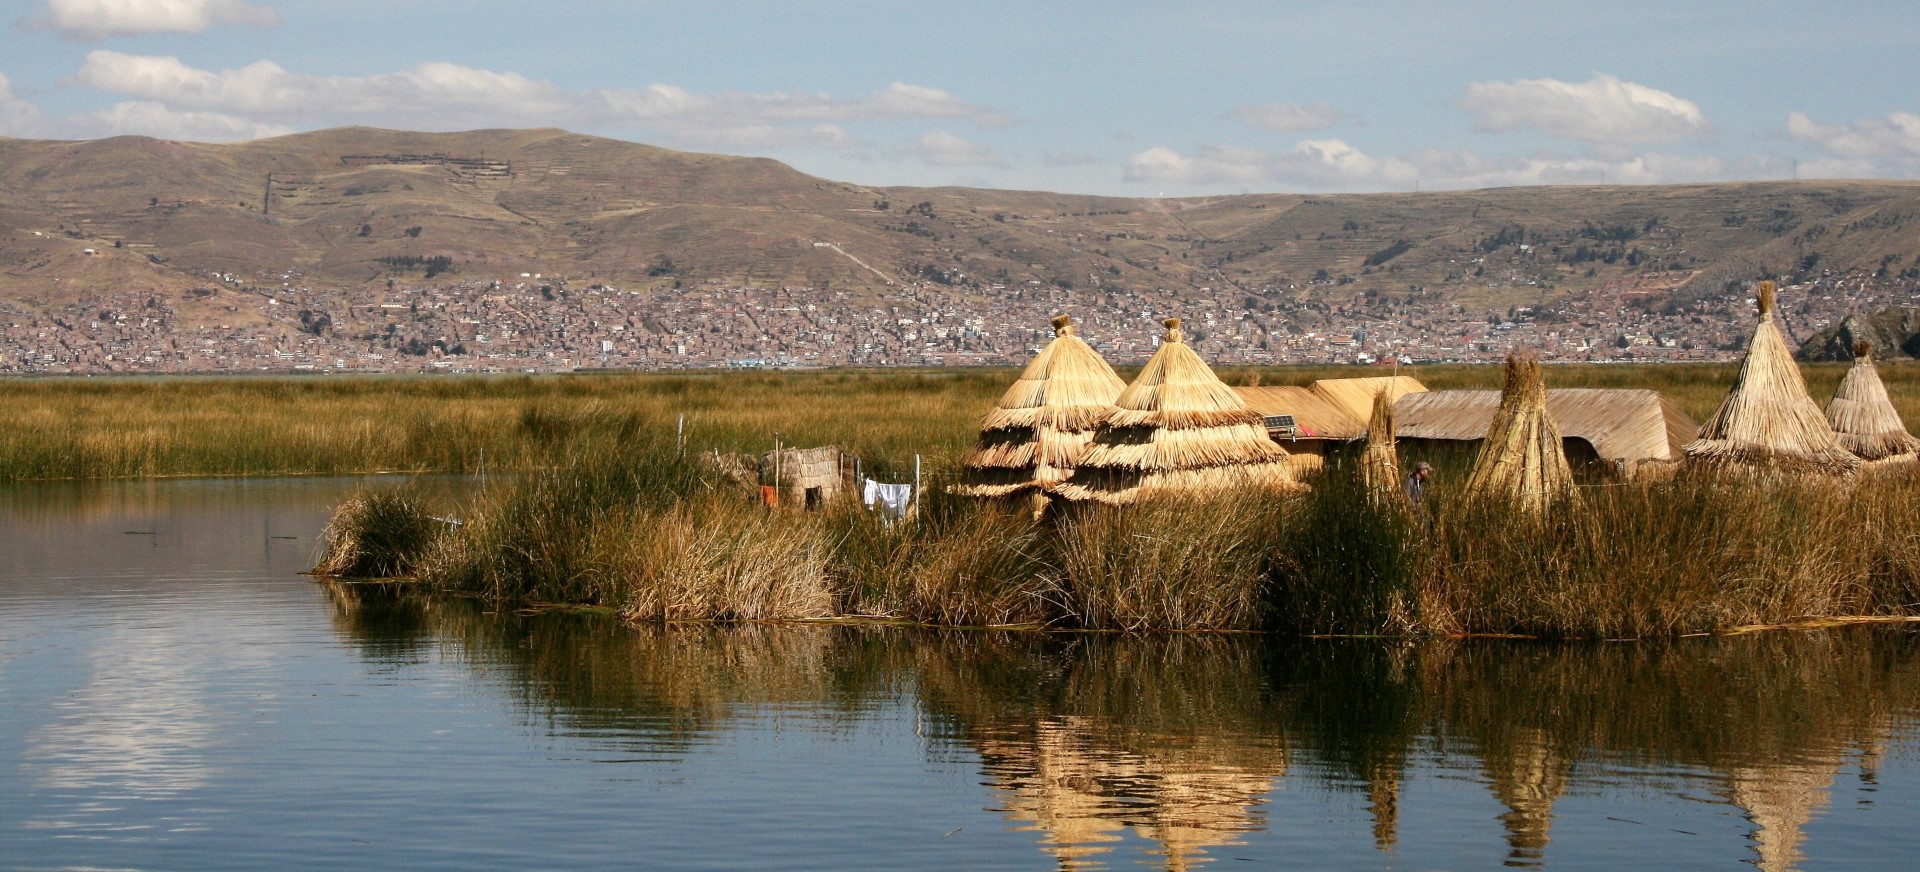 titicaca meer peru, uros indianen drijvend eiland